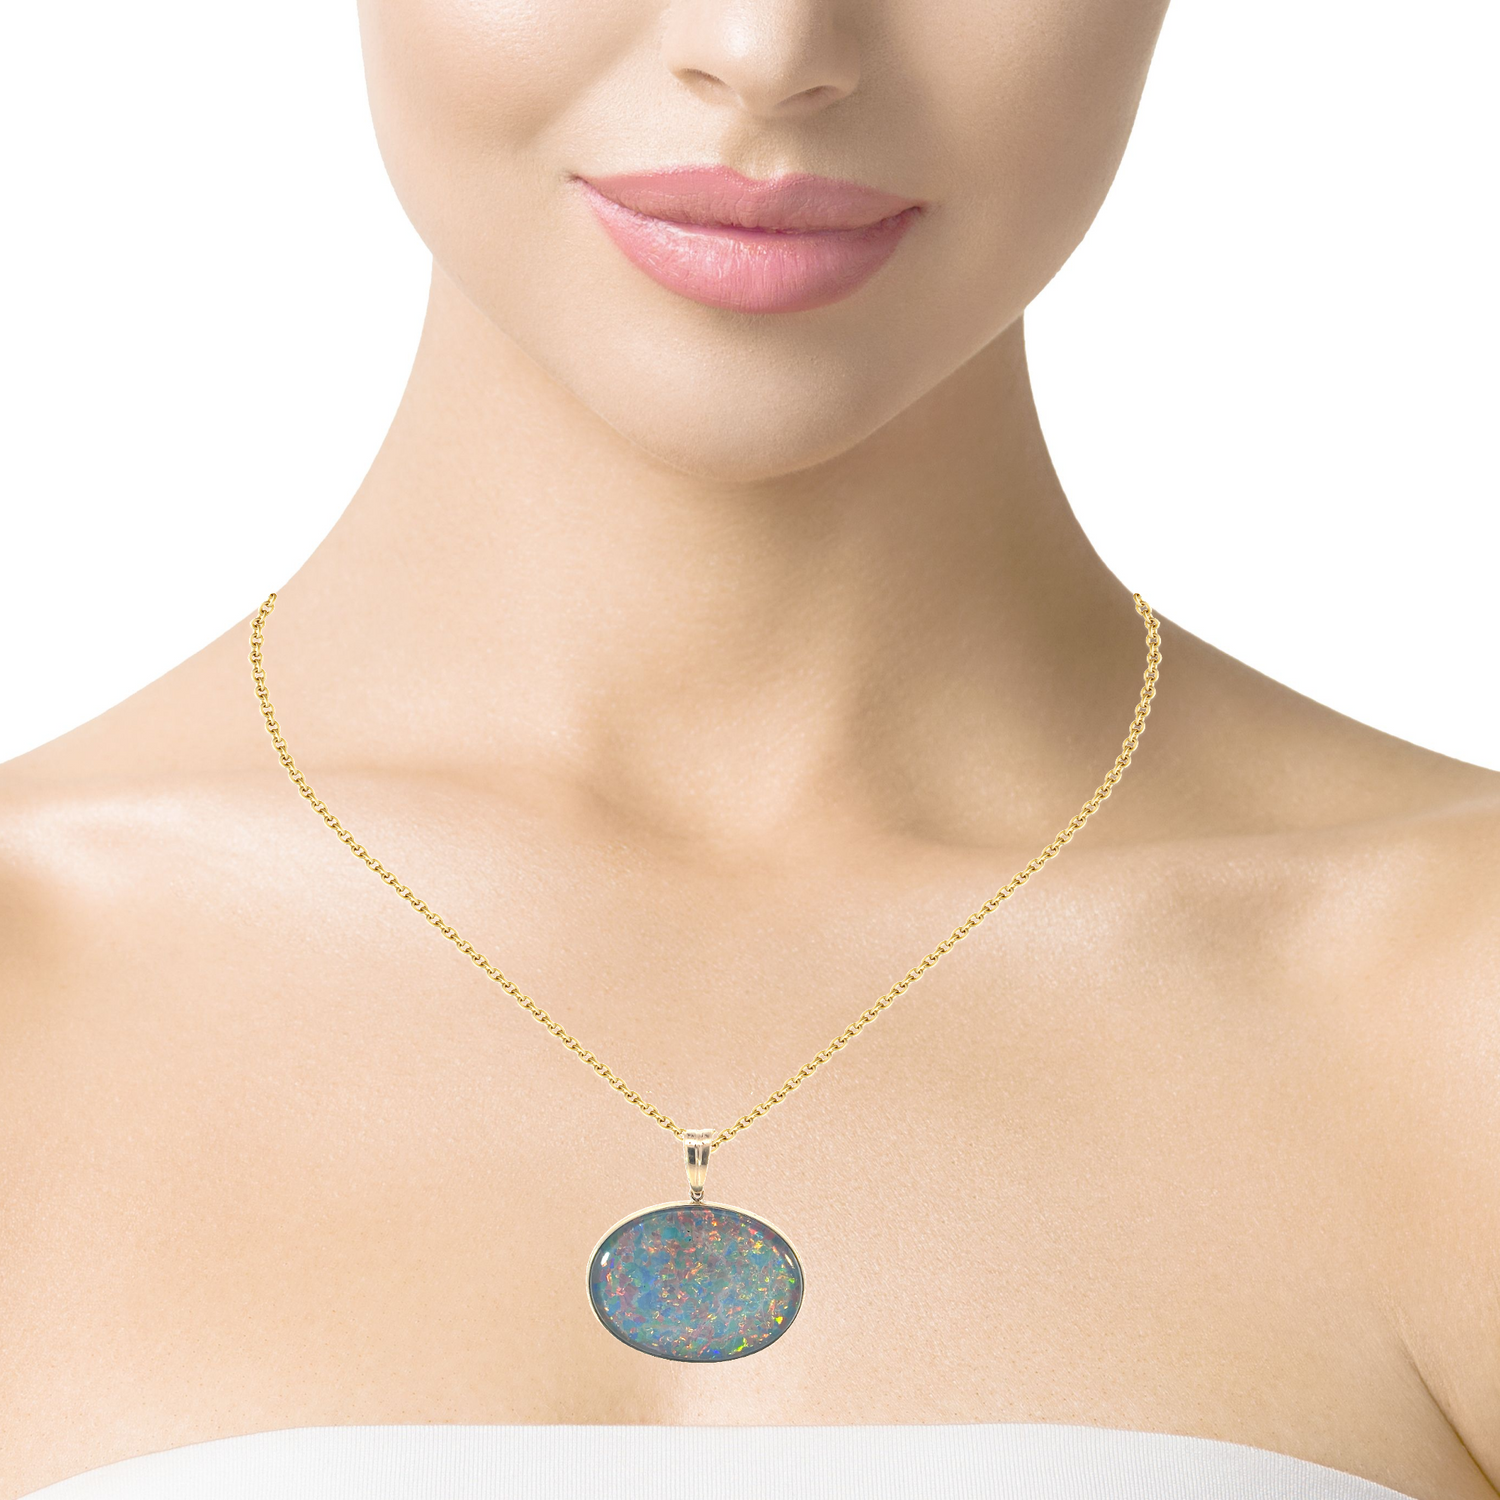 9kt Yellow Gold bezel set Opal triplet 40x30mm - Masterpiece Jewellery Opal & Gems Sydney Australia | Online Shop